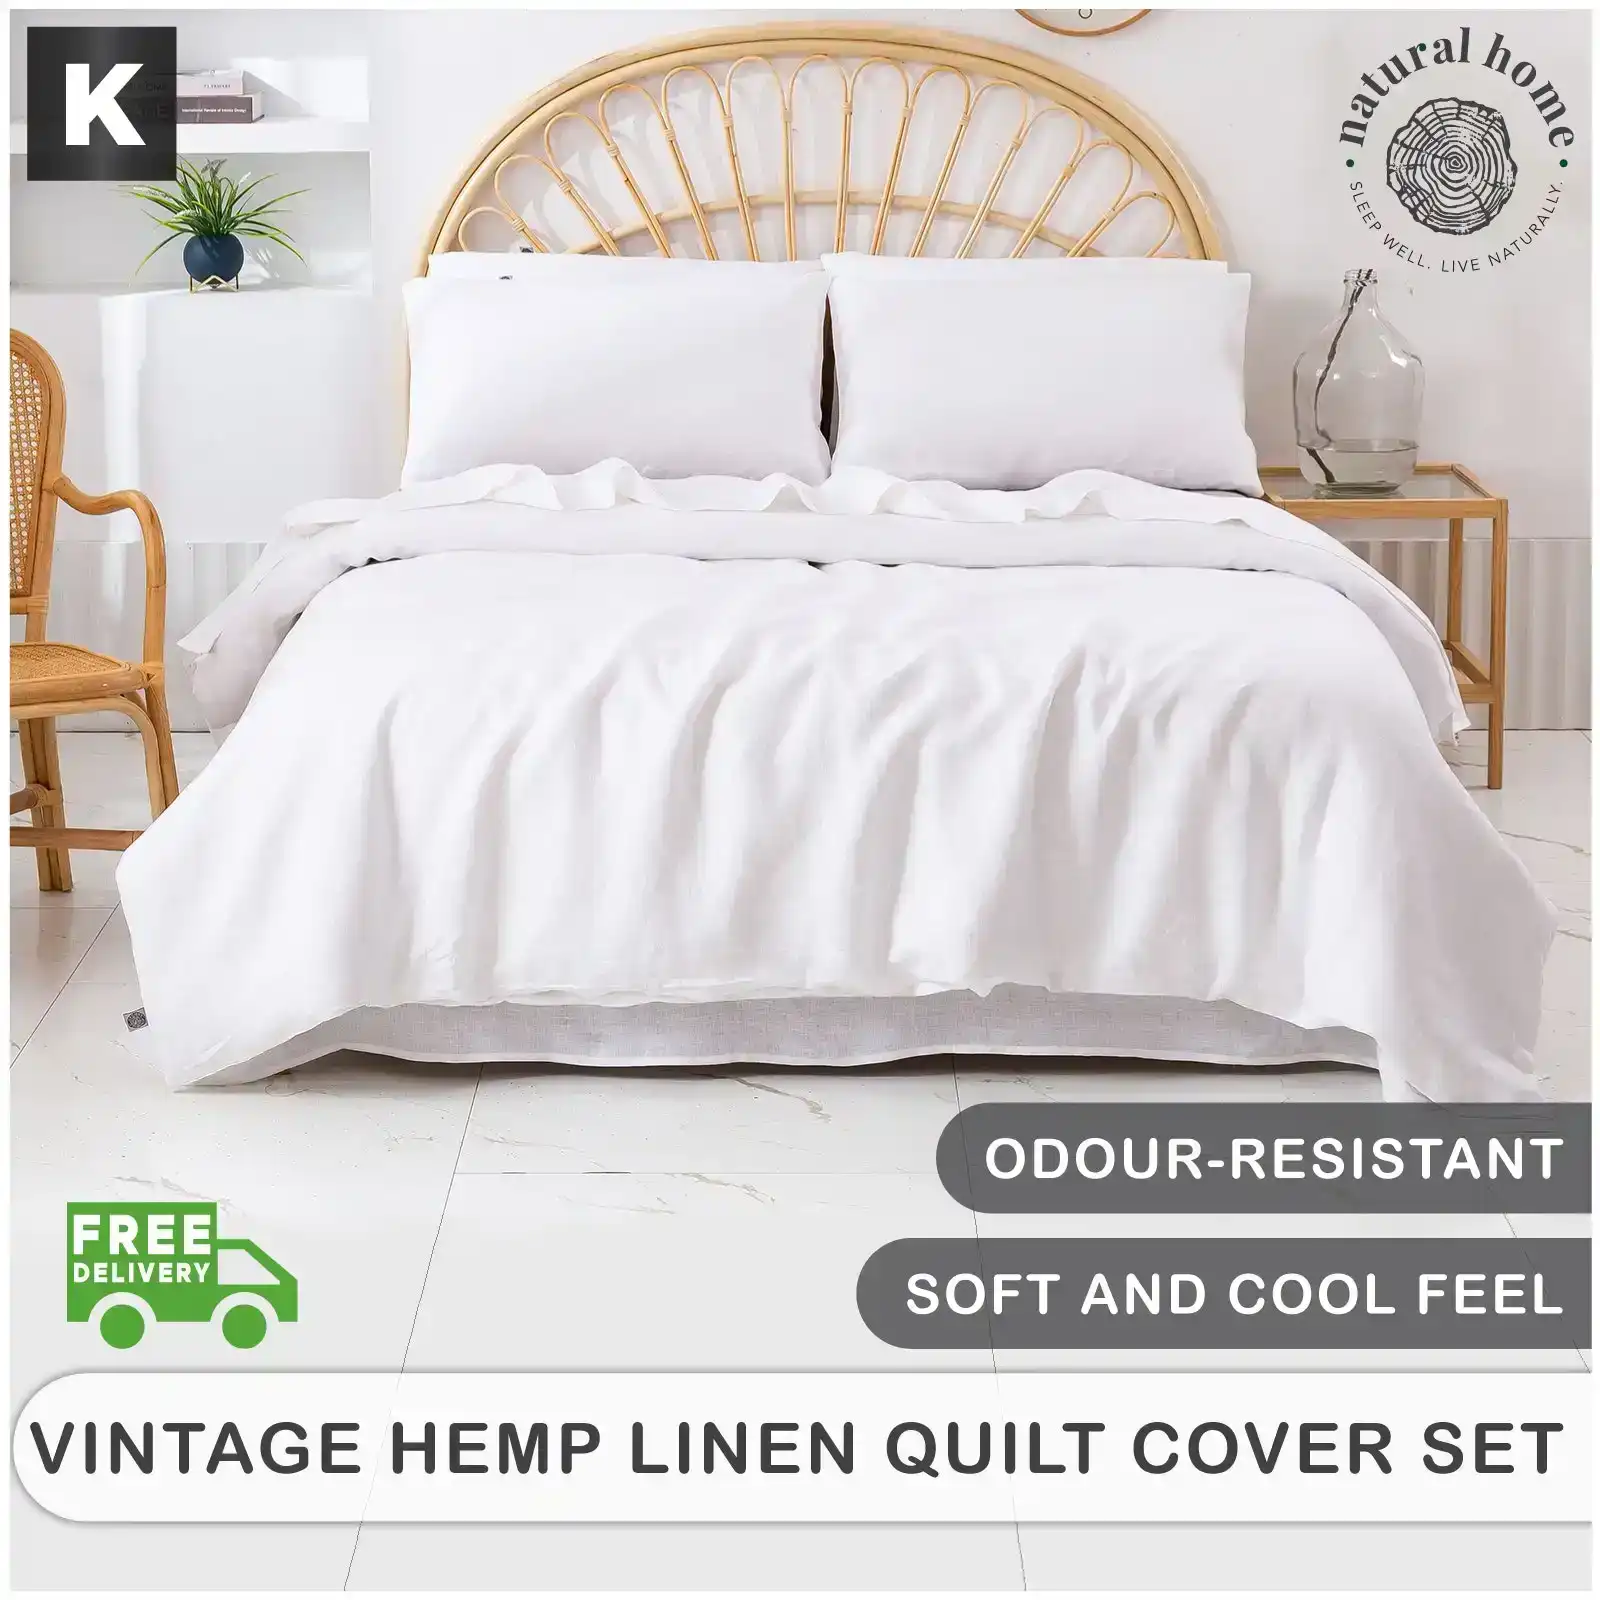 Natural Home Vintage Washed Hemp Linen Quilt Cover Set White King Bed